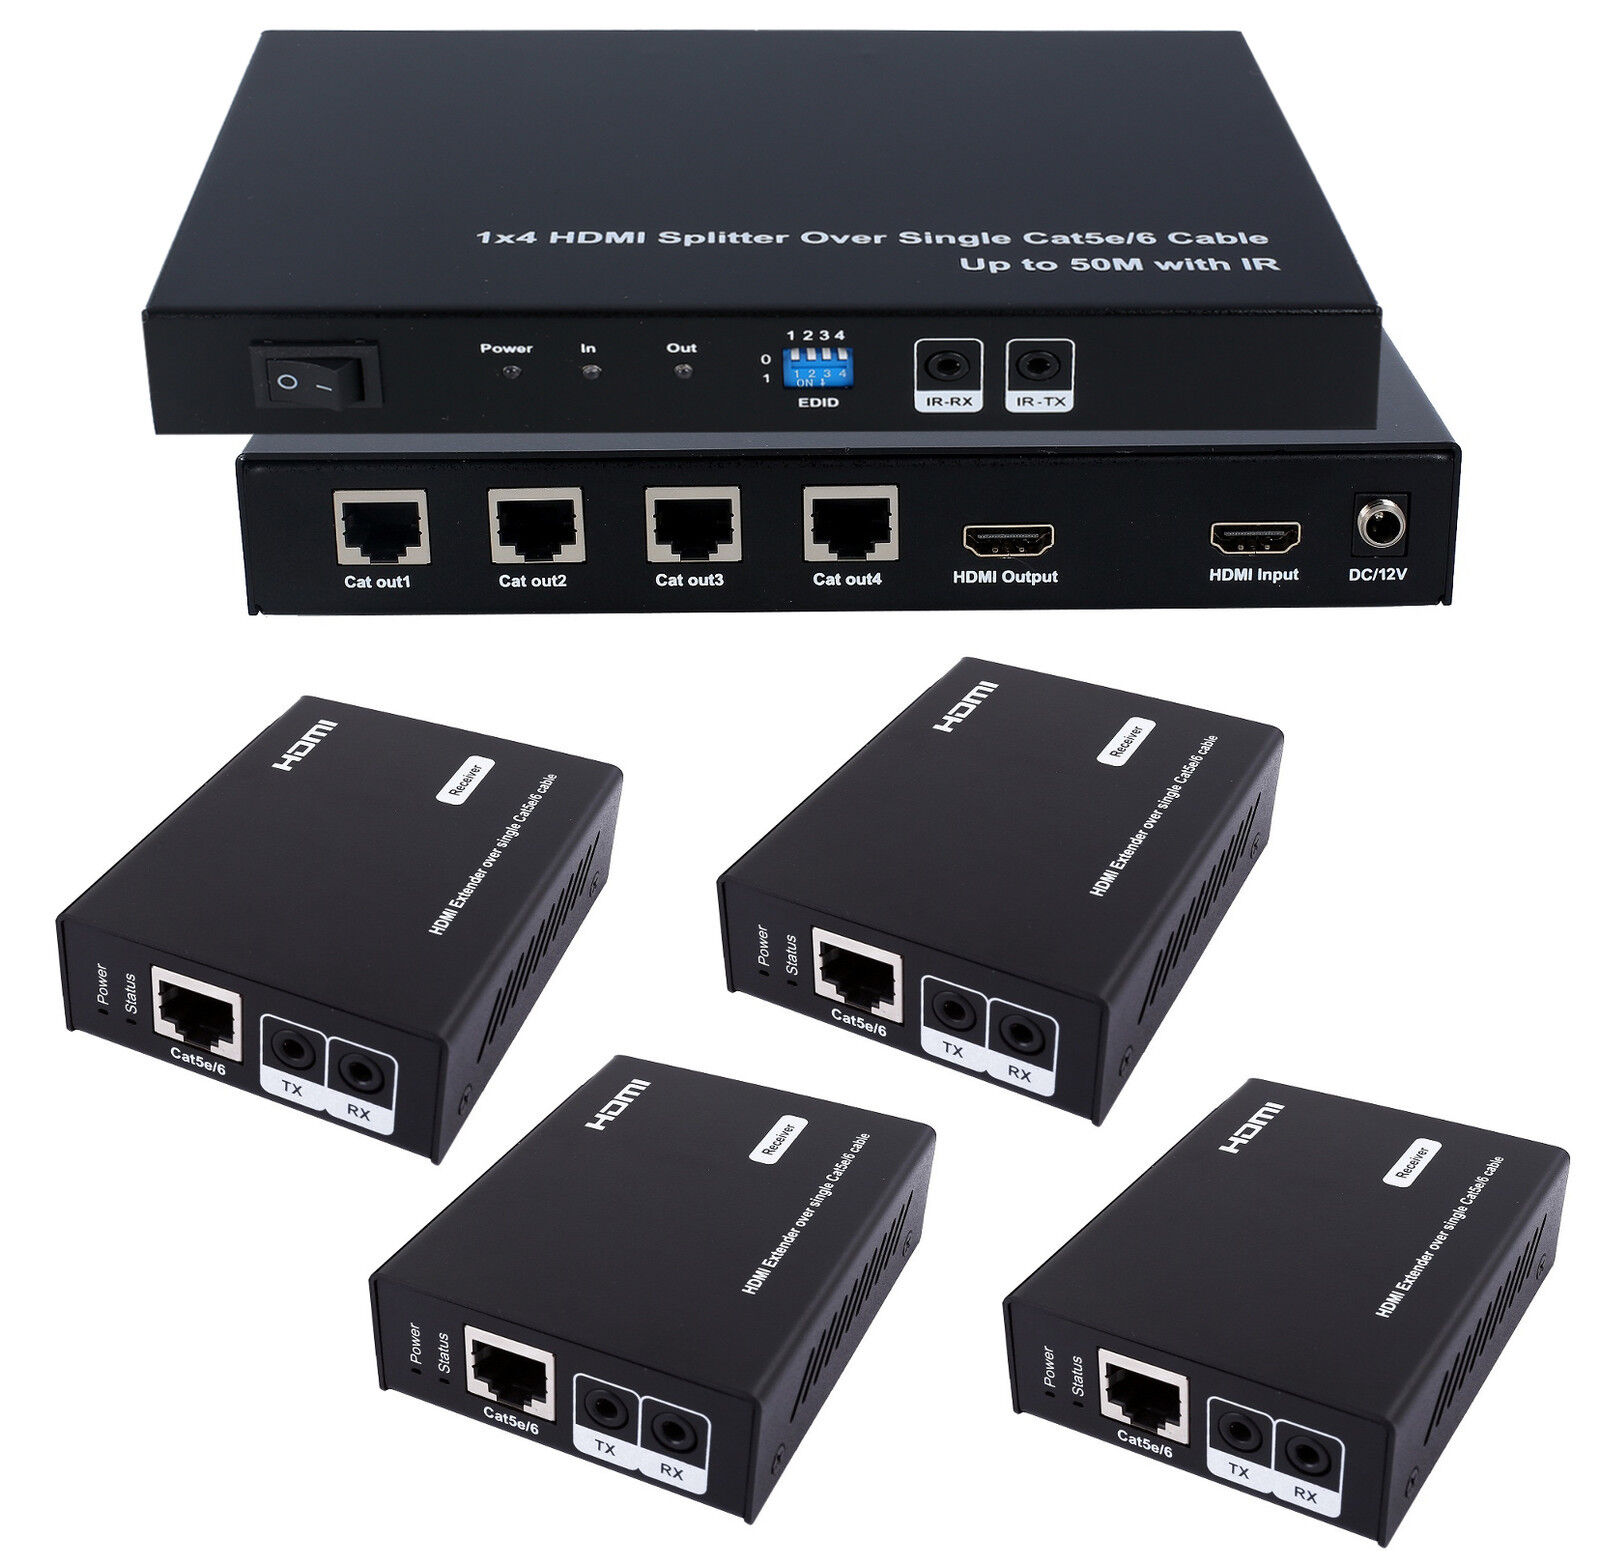 1x4 HDMI 4-Port Splitter Extender Kit w/ IR over RJ45 CAT5e CAT6 Ethernet Cable